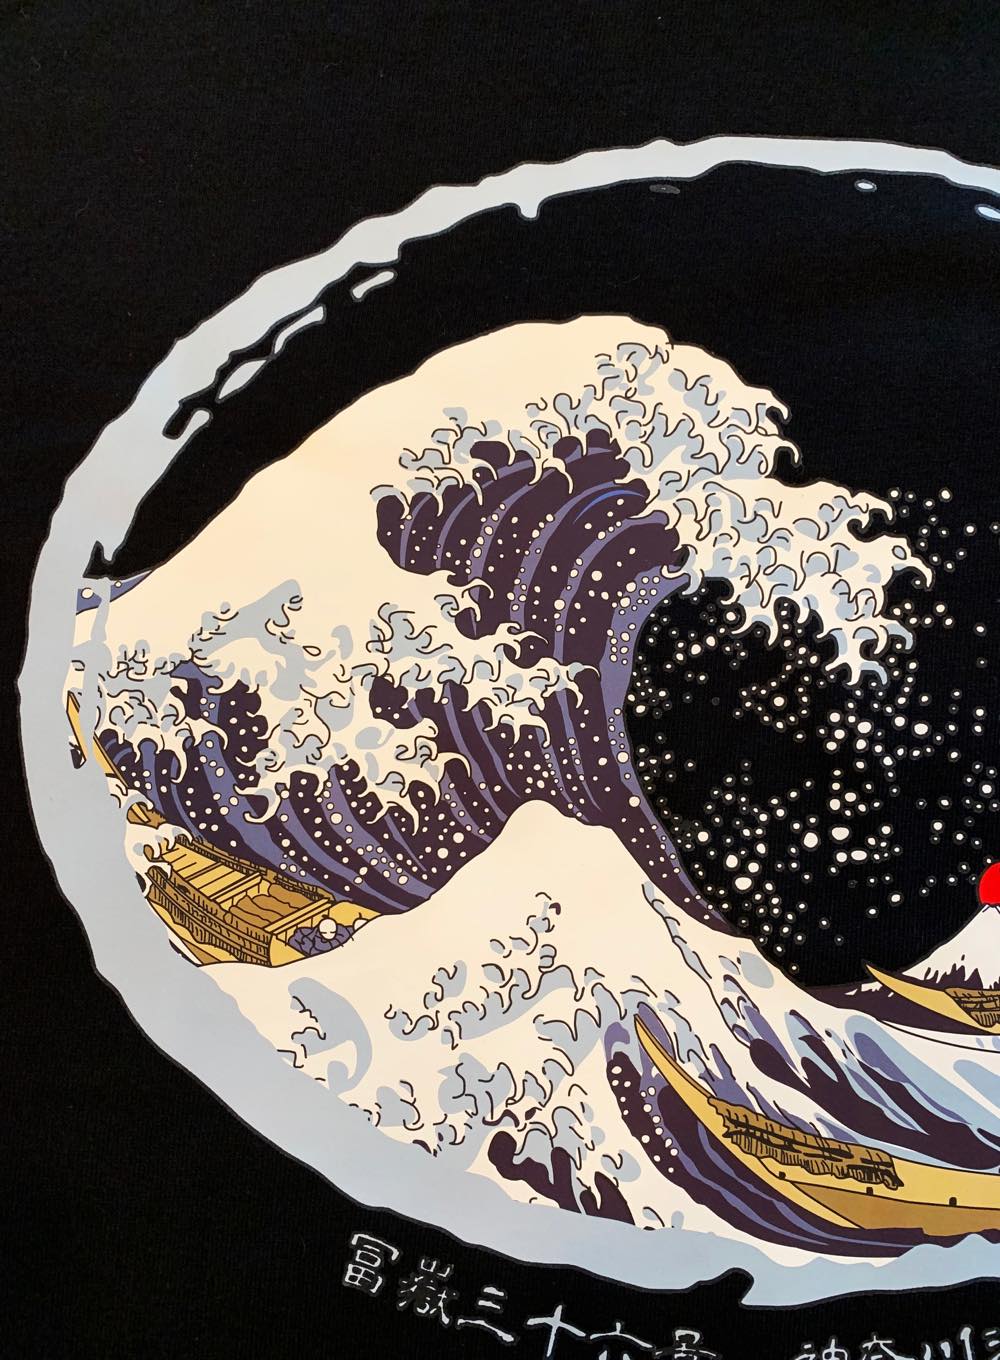 Japonesque 北斎 T 神奈川沖浪裏 Tシャツ BK Katsushika Hokusai The Great Wave off Kanagawa T-shirt